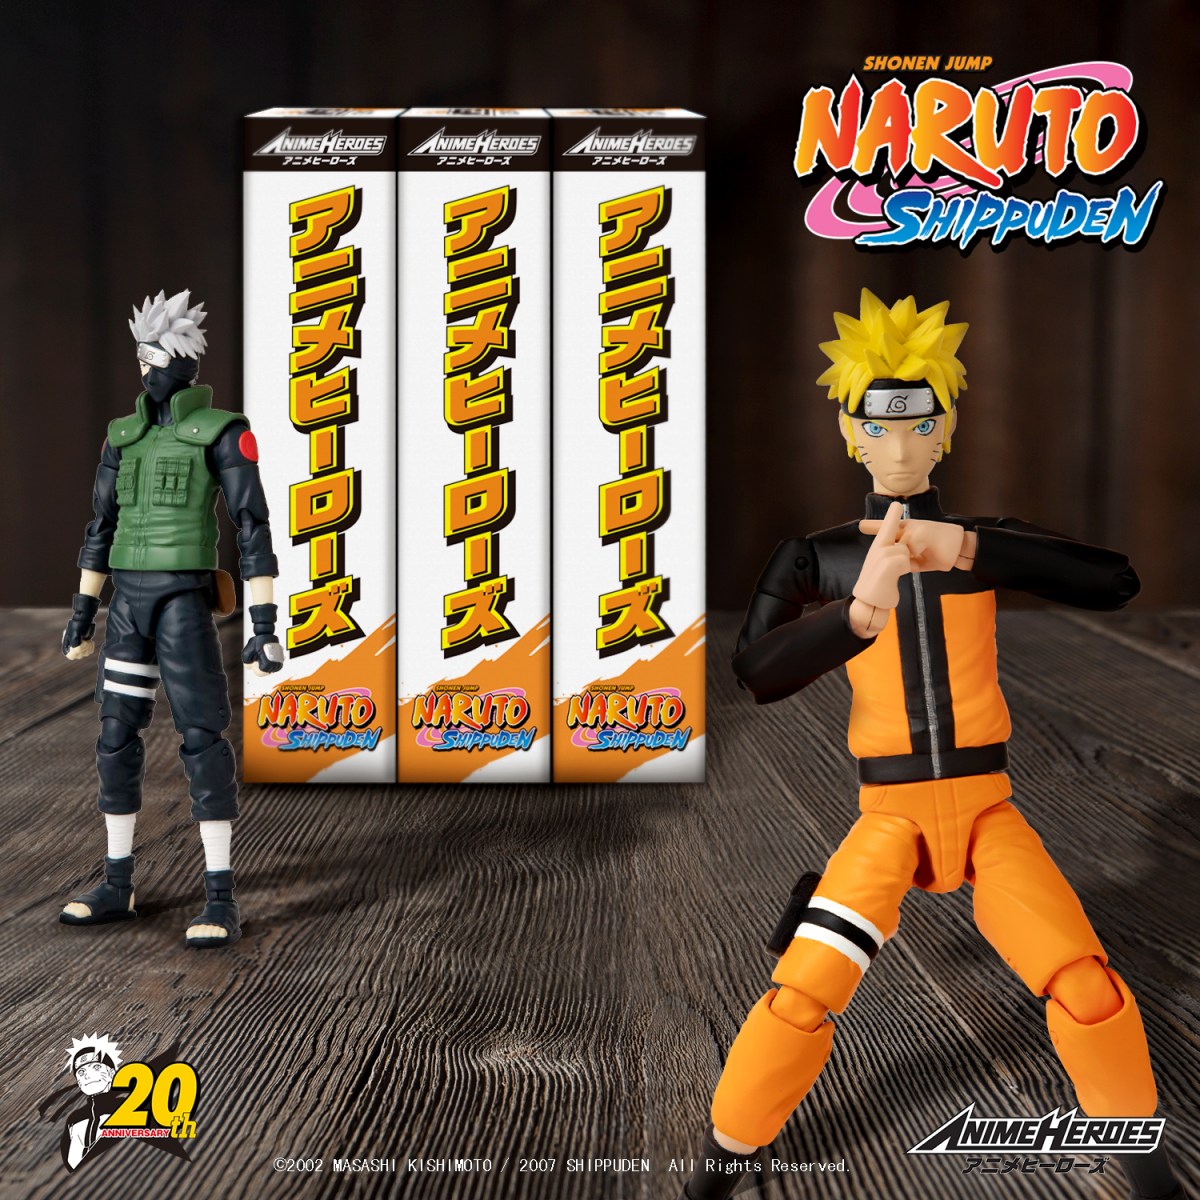 Naruto figures